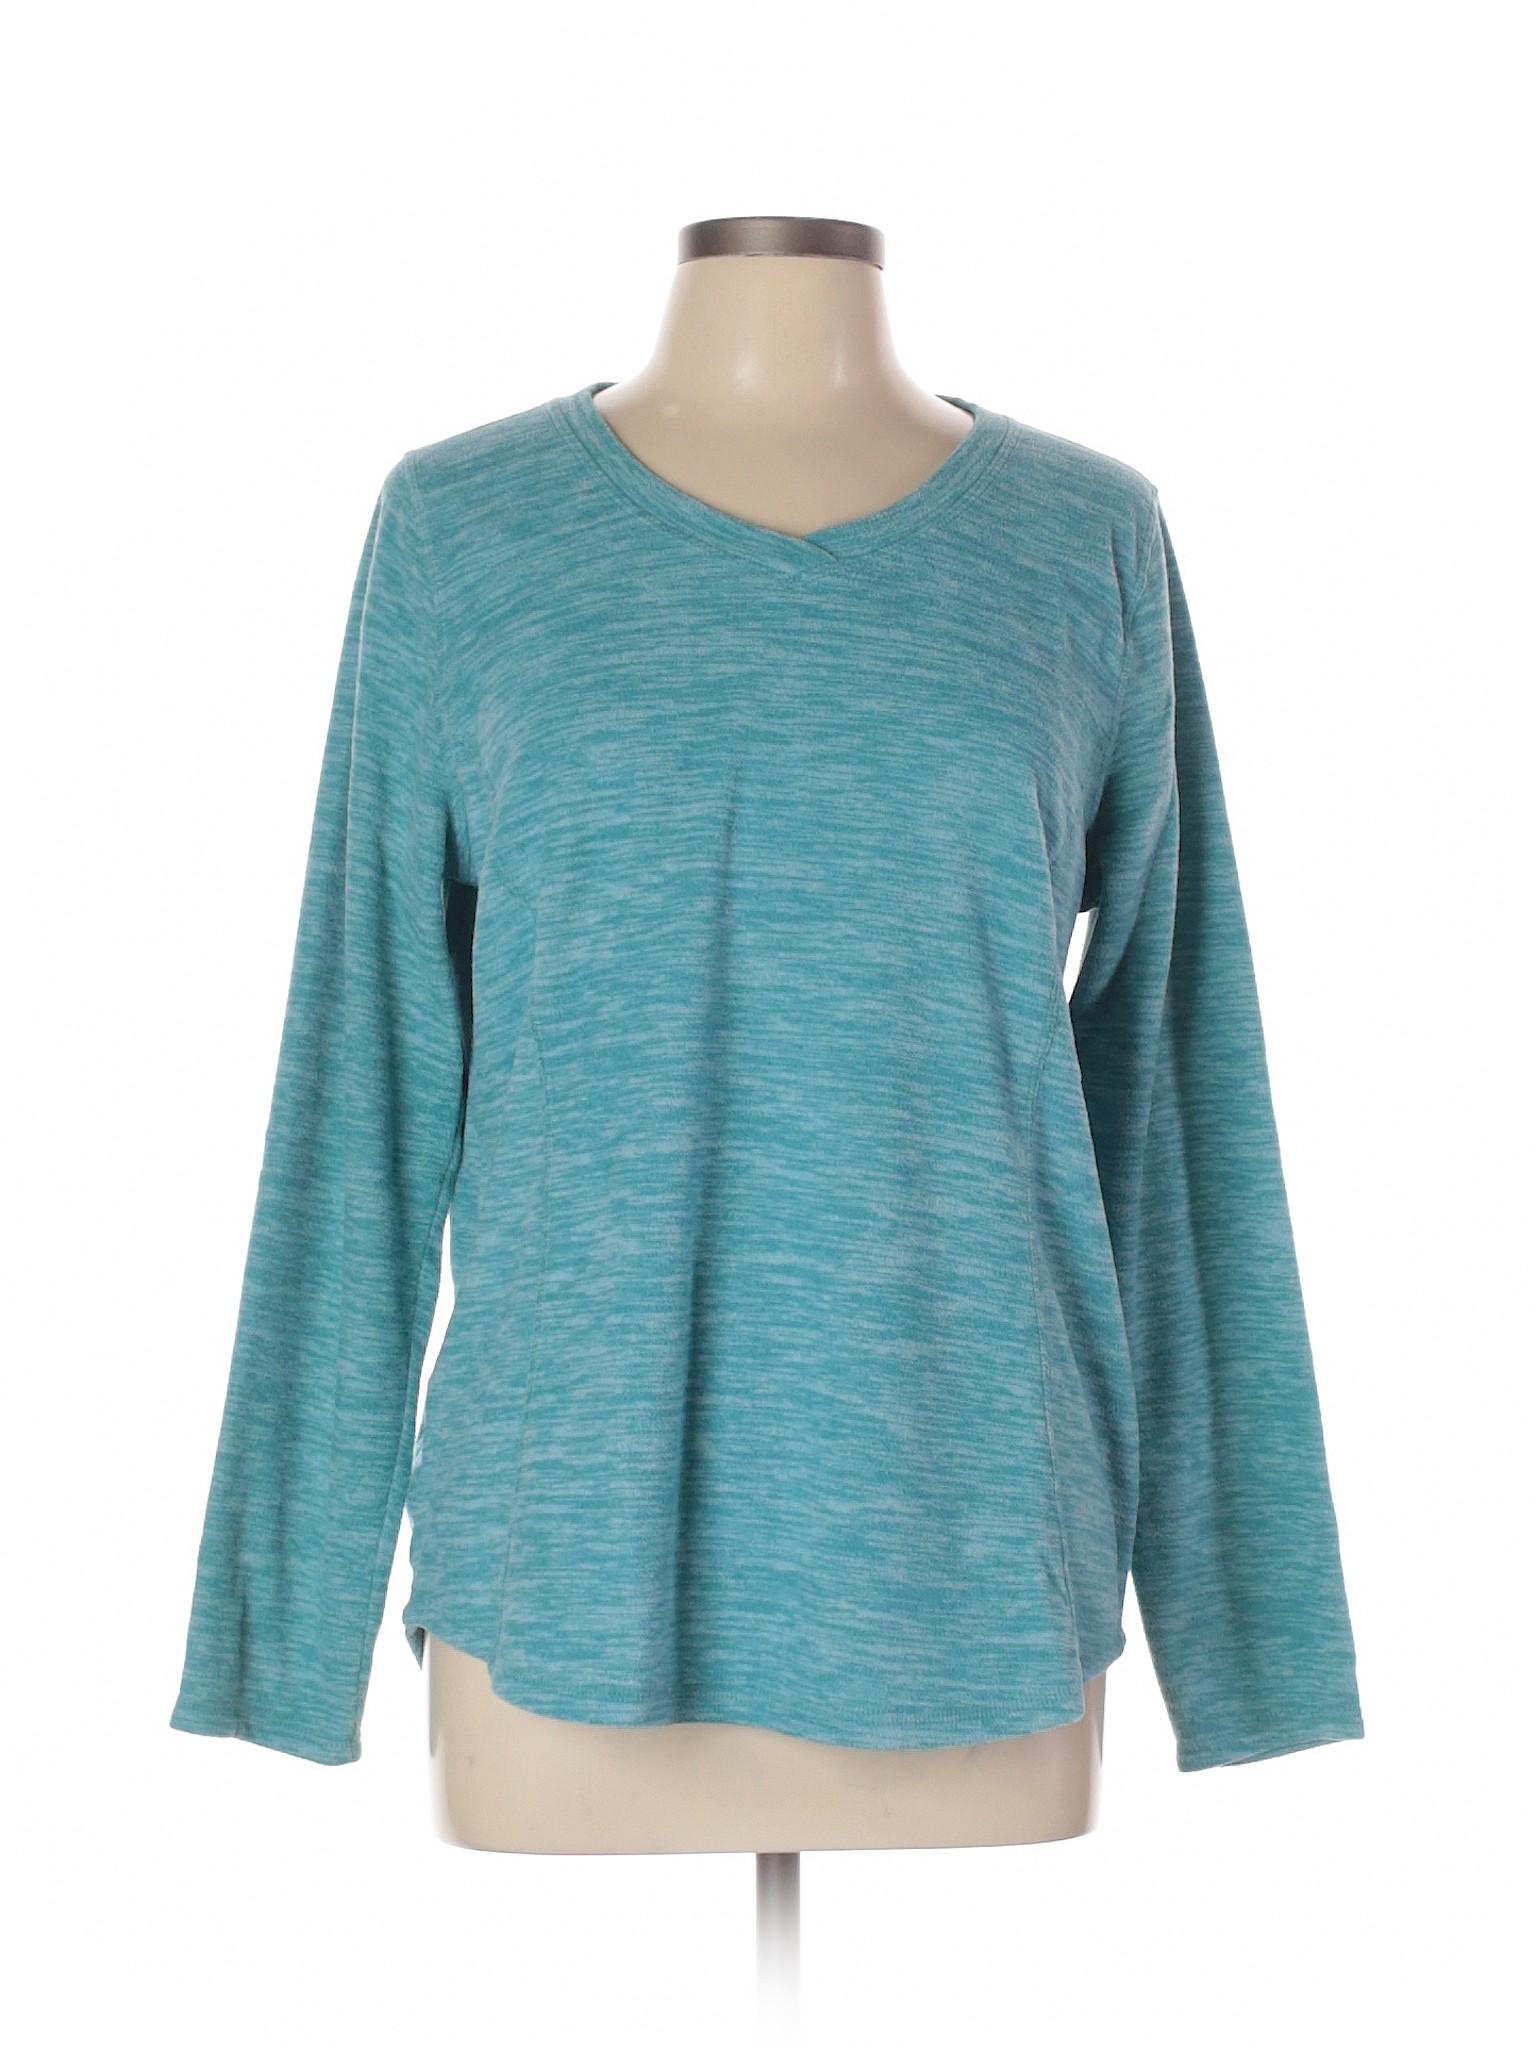 St. John's Bay Women Green Pullover Sweater L | eBay